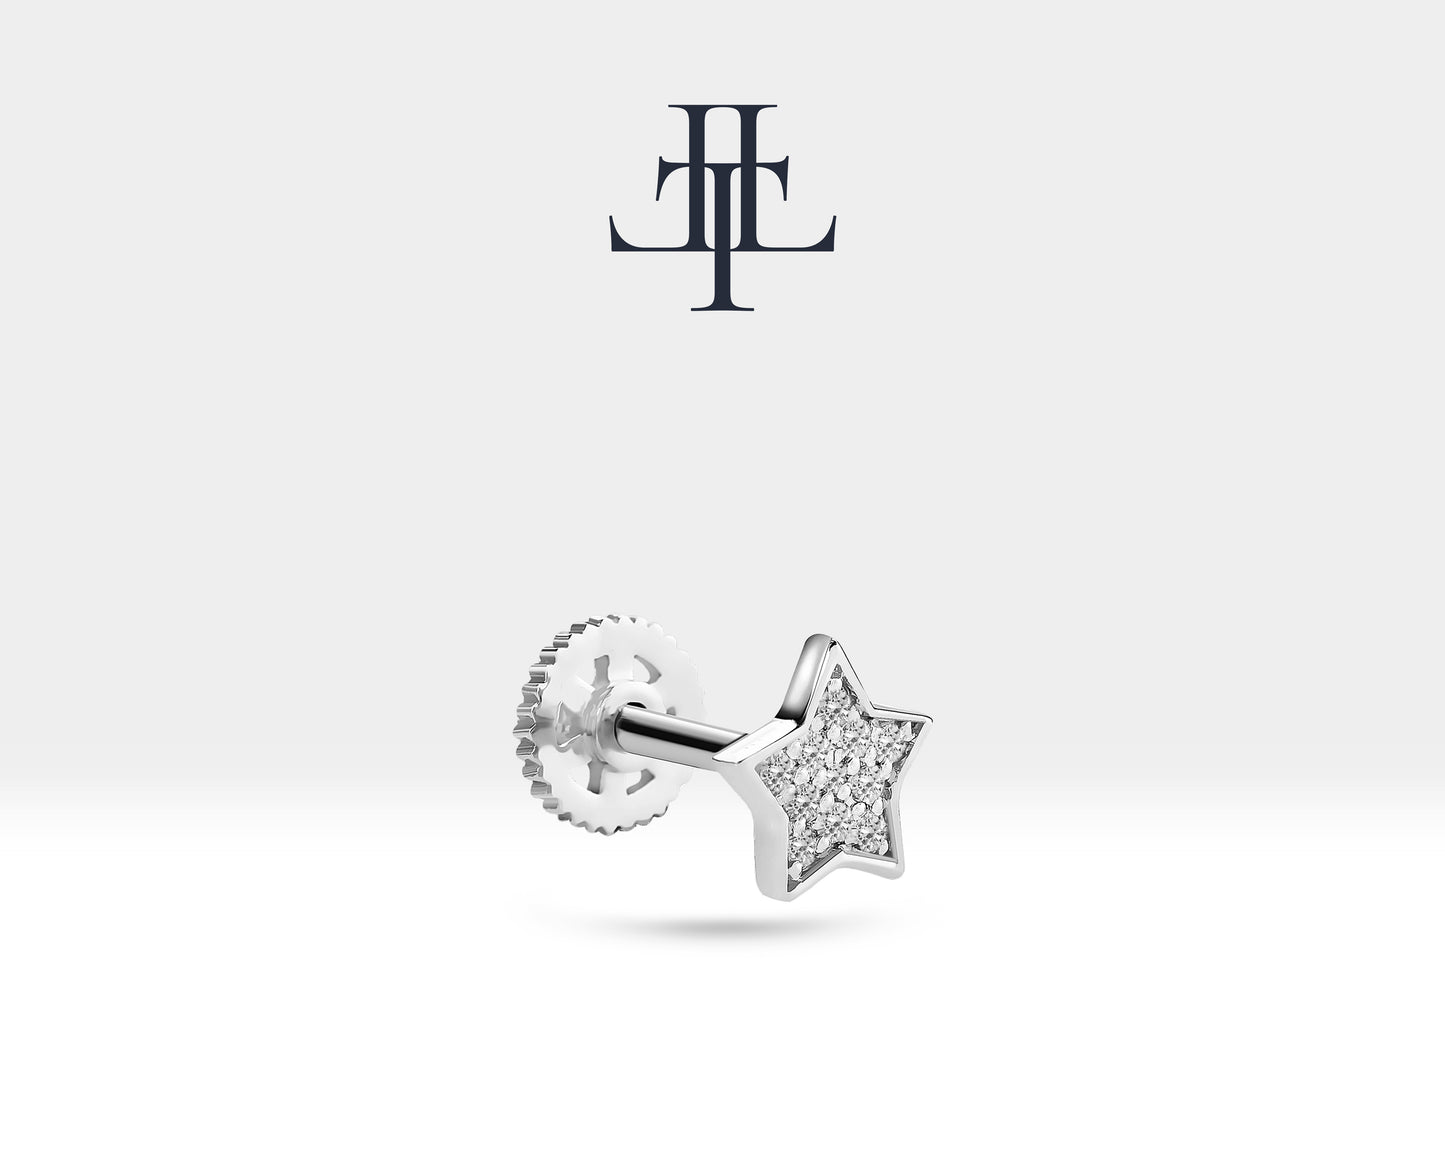 Cartilage Piercing Large Star Design , Round Cut Diamond Piercing